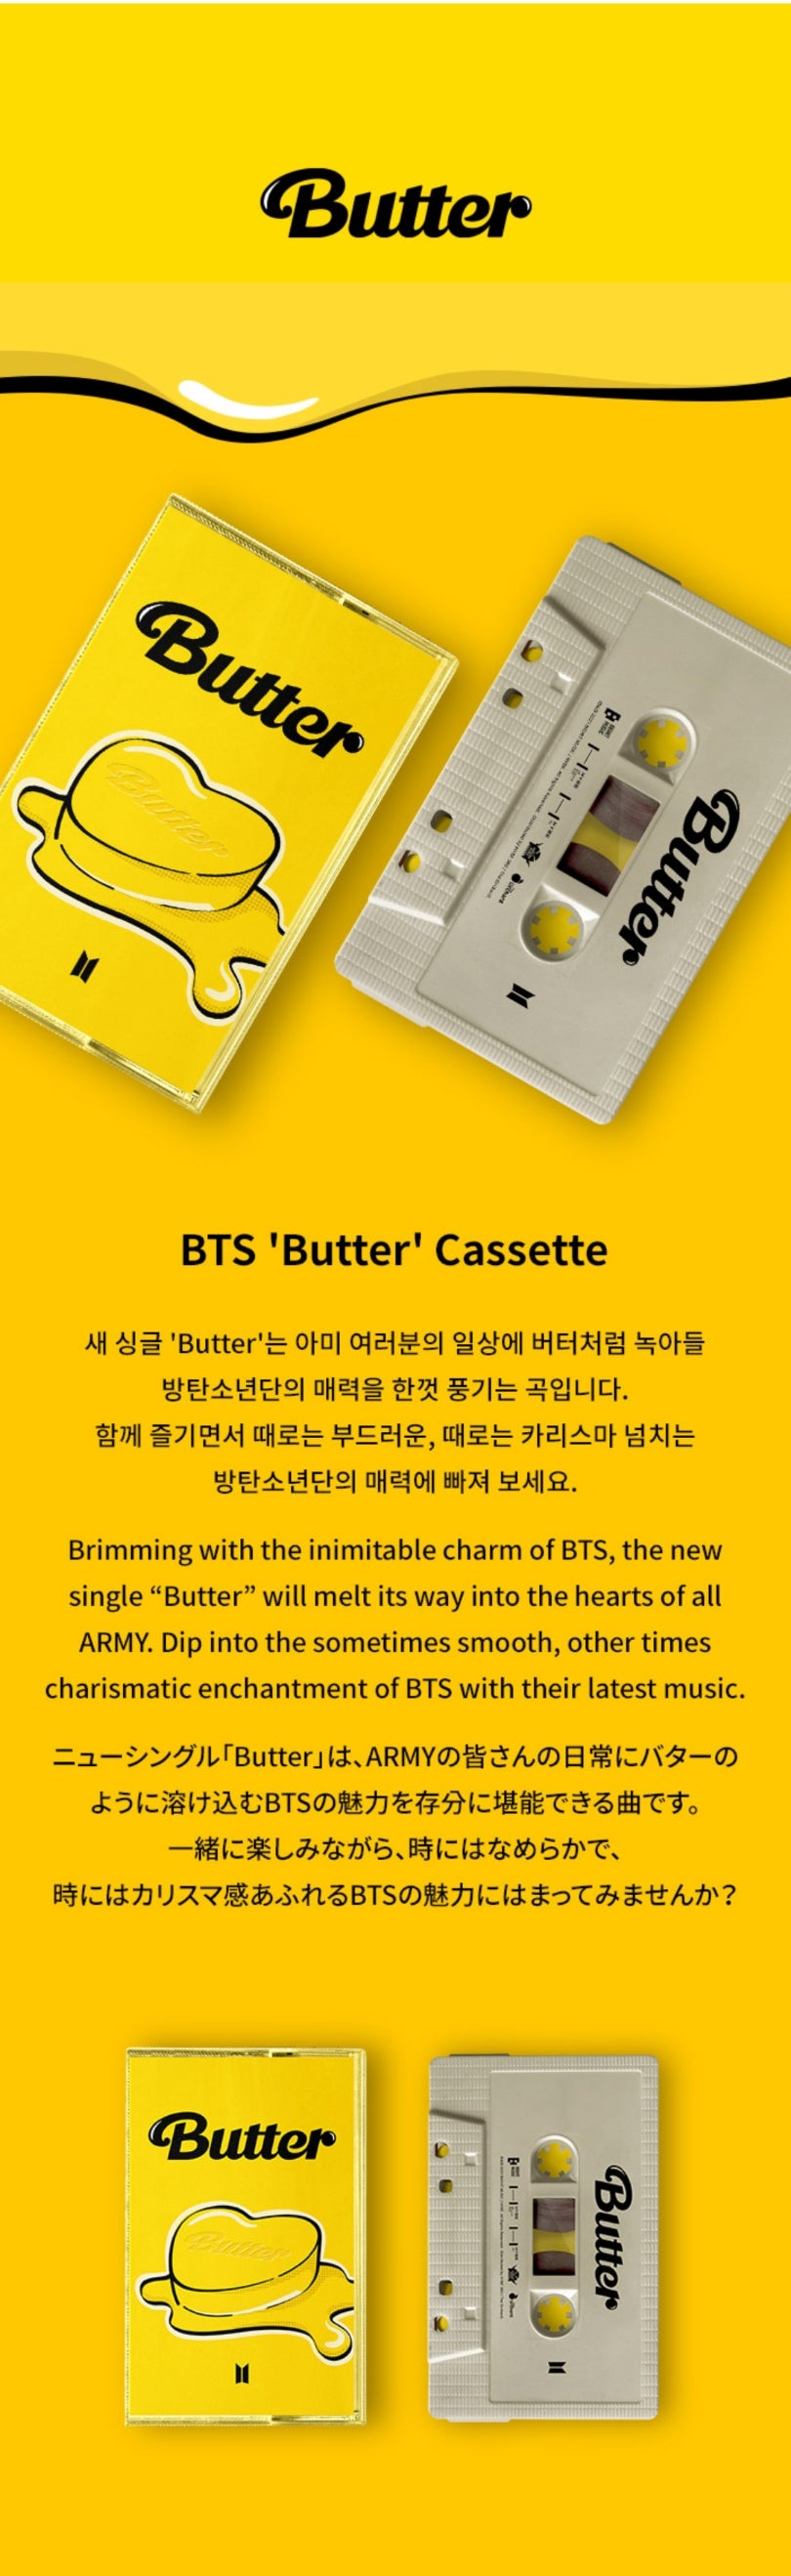 bts butter cassette kshopina